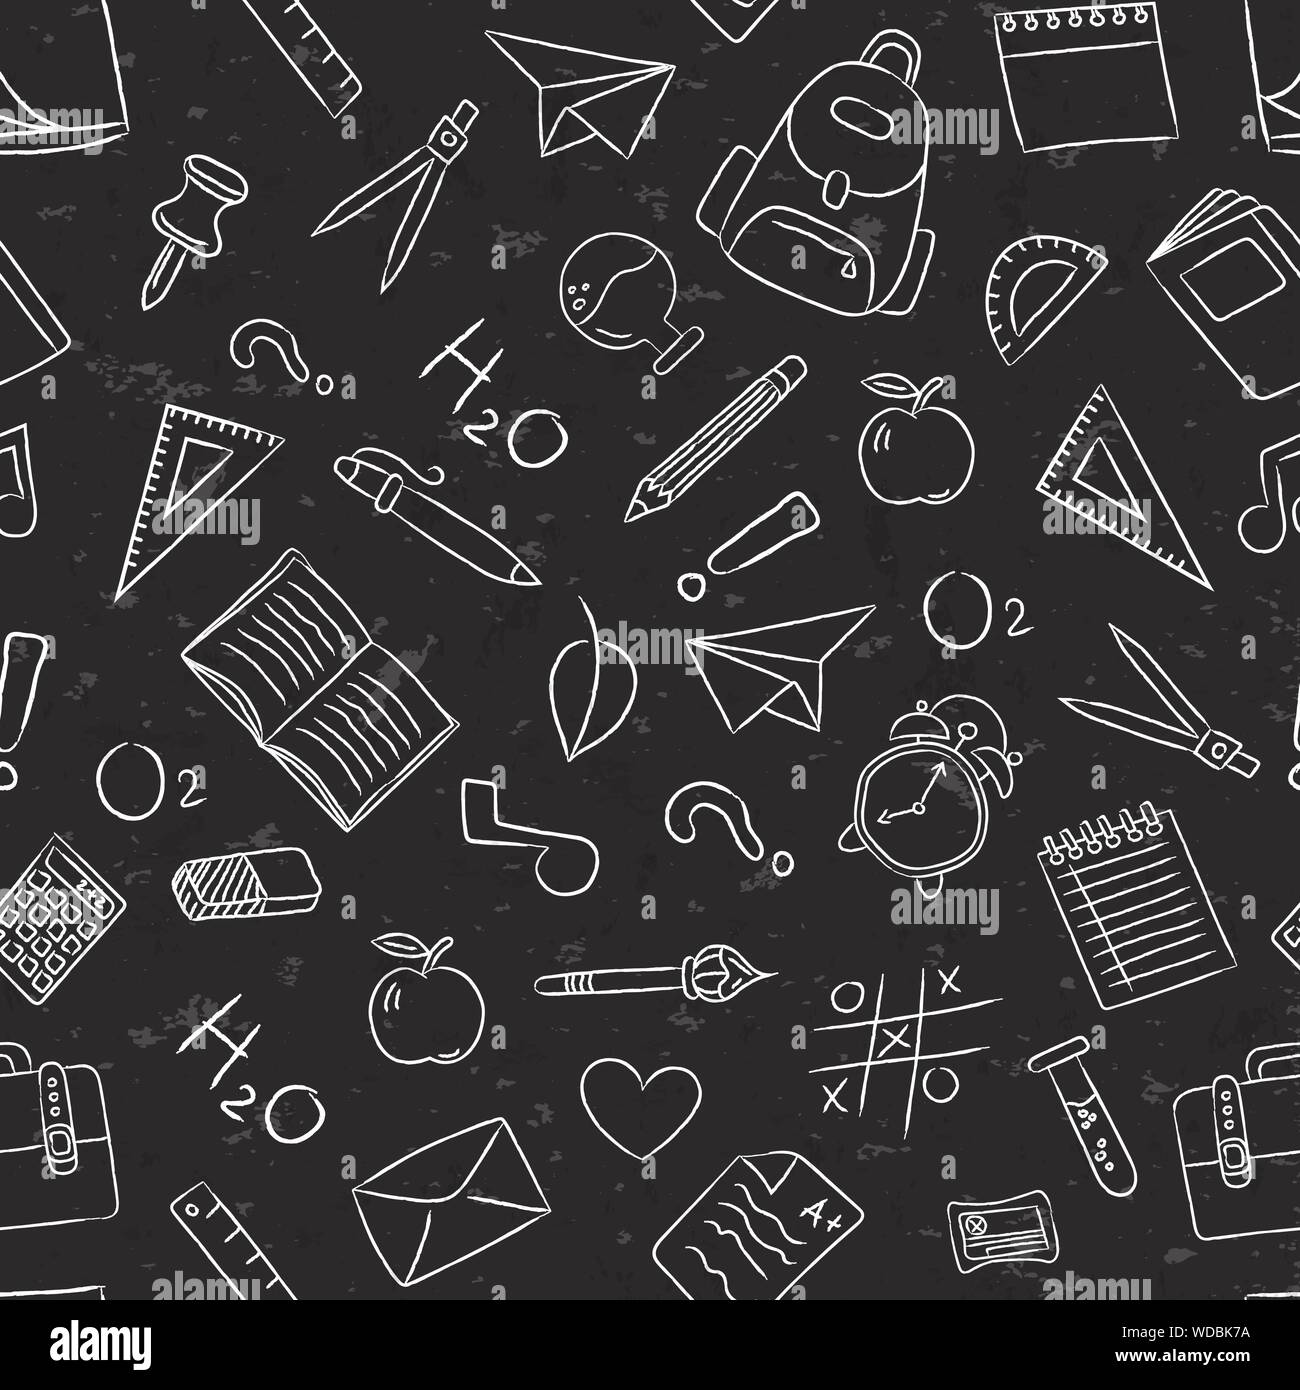 https://c8.alamy.com/comp/WDBK7A/school-icon-seamless-pattern-illustration-fun-hand-drawn-chalk-doodles-on-blackboard-background-for-education-concept-WDBK7A.jpg